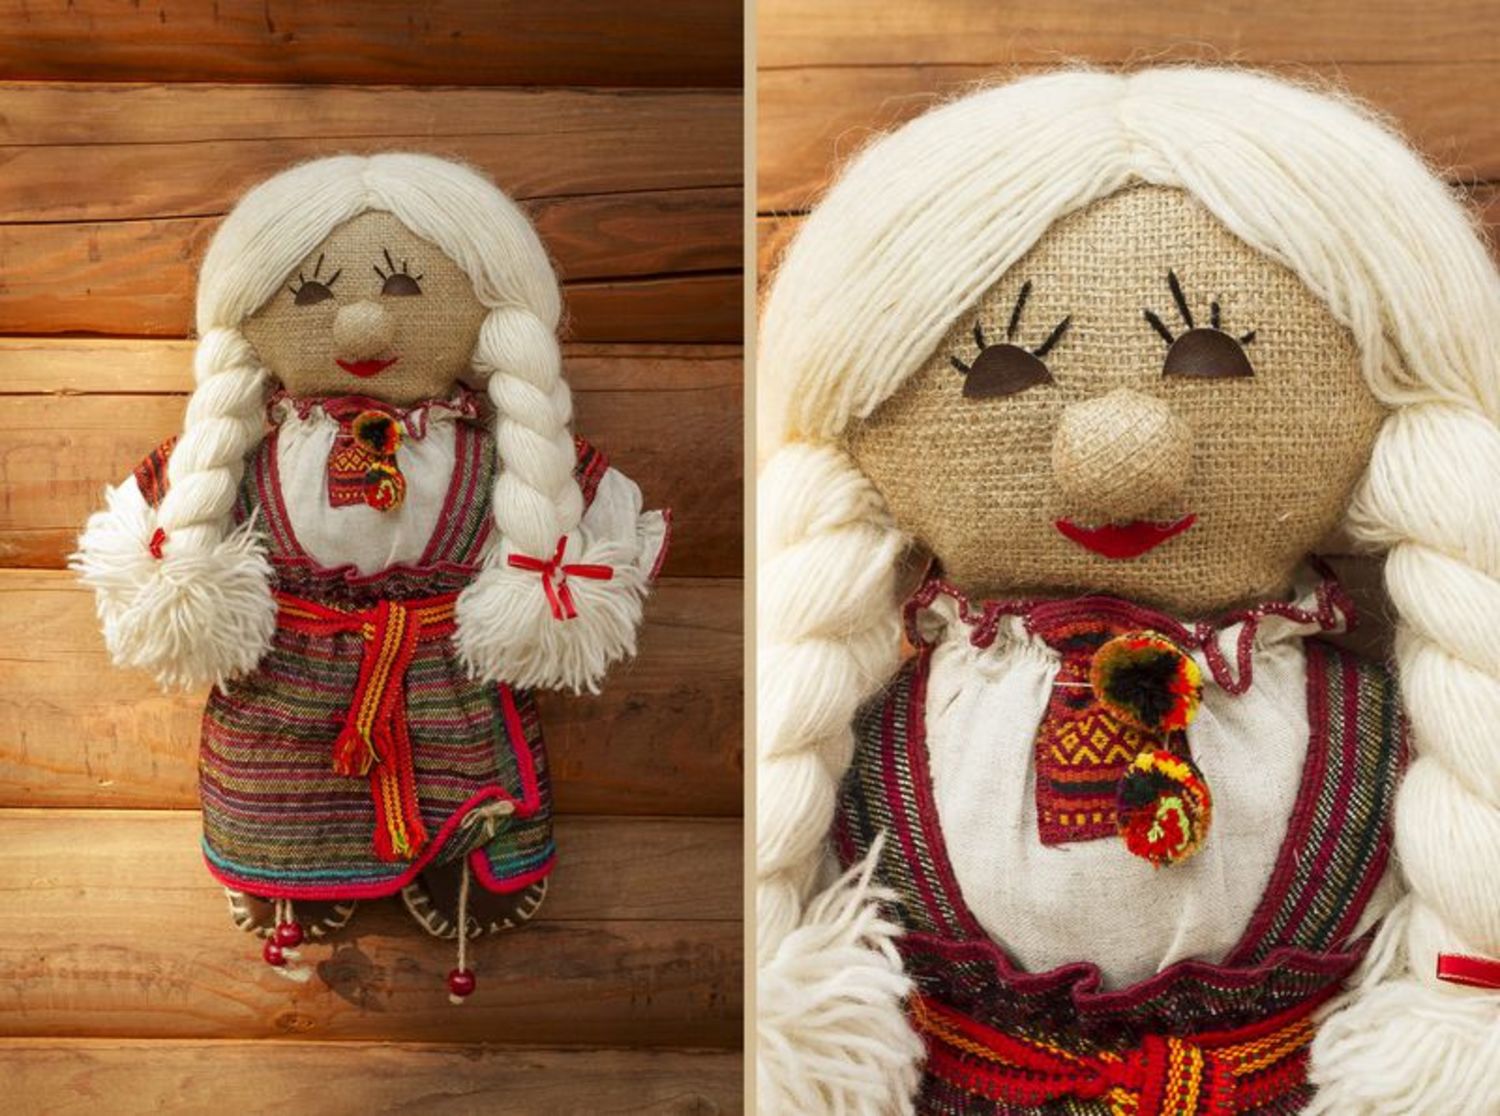 Soft ethnic doll photo 1